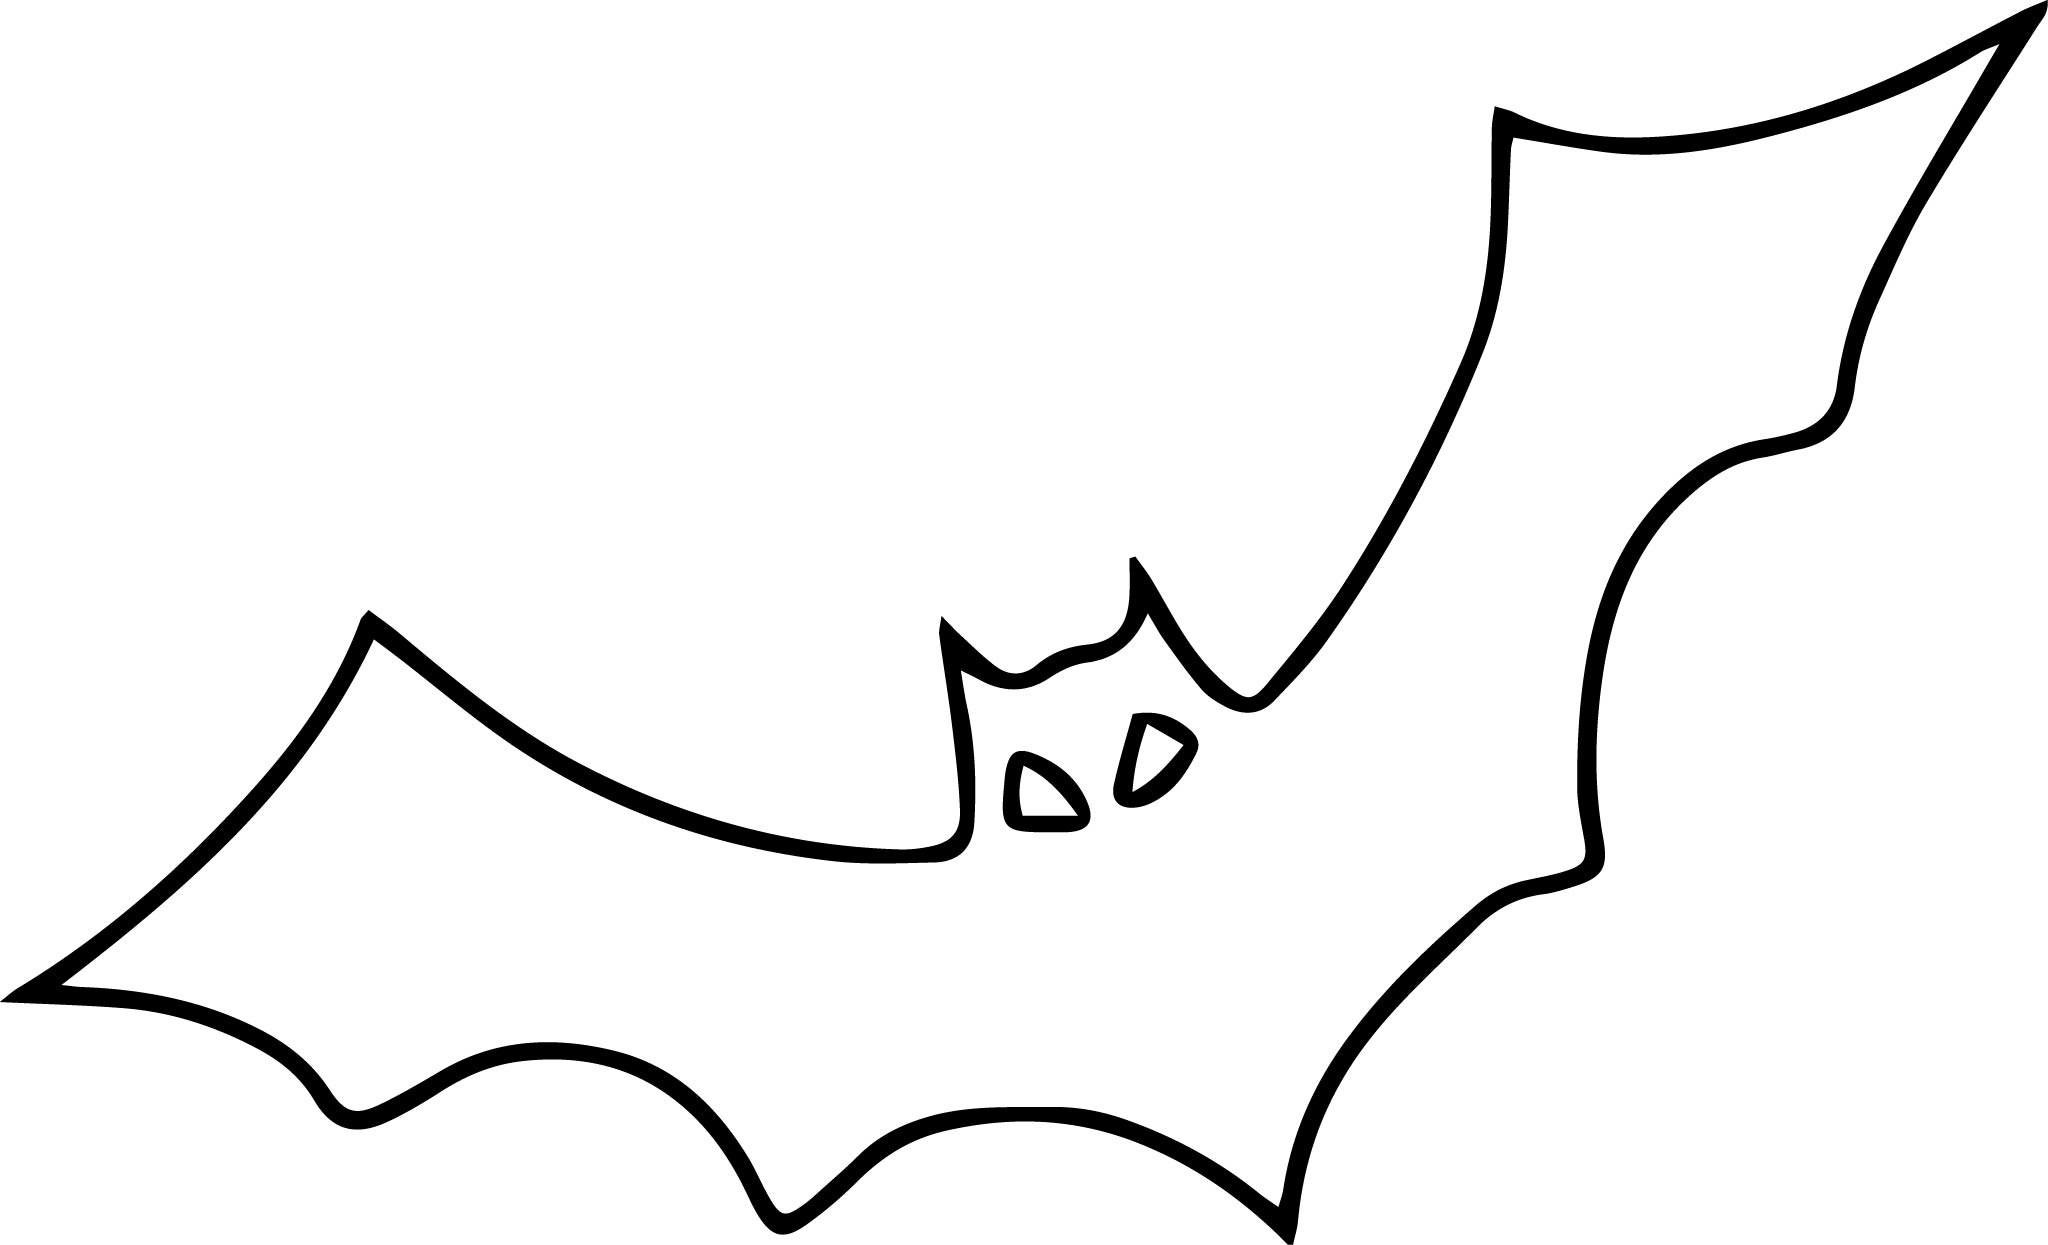 Simple bat drawing.